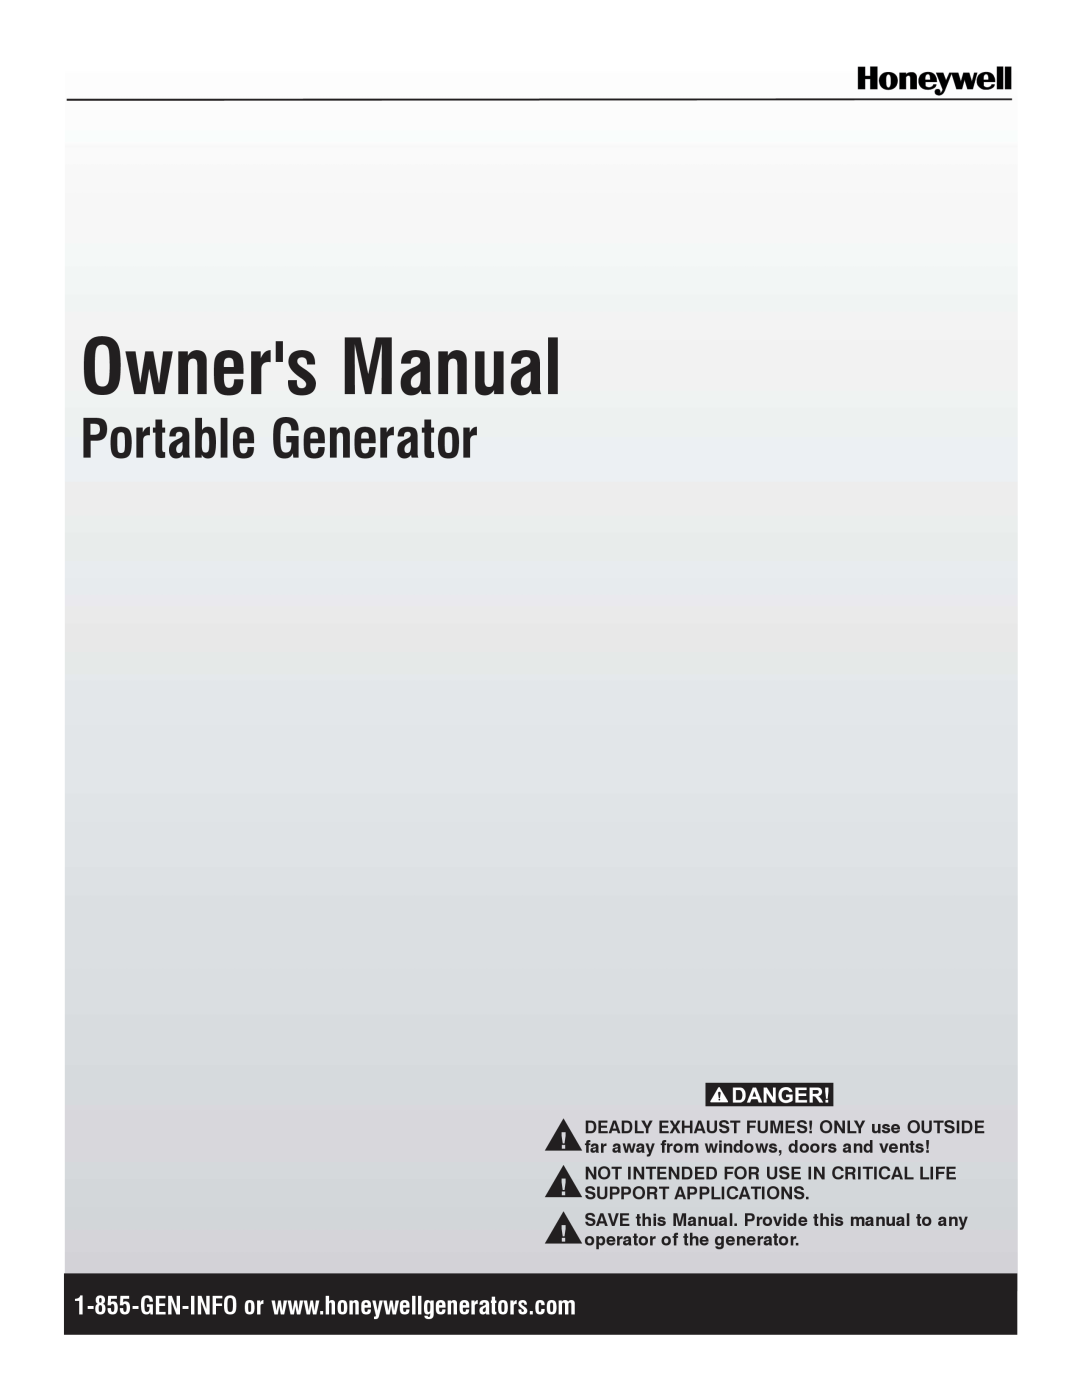 Honeywell 6039 owner manual Portable Generator 